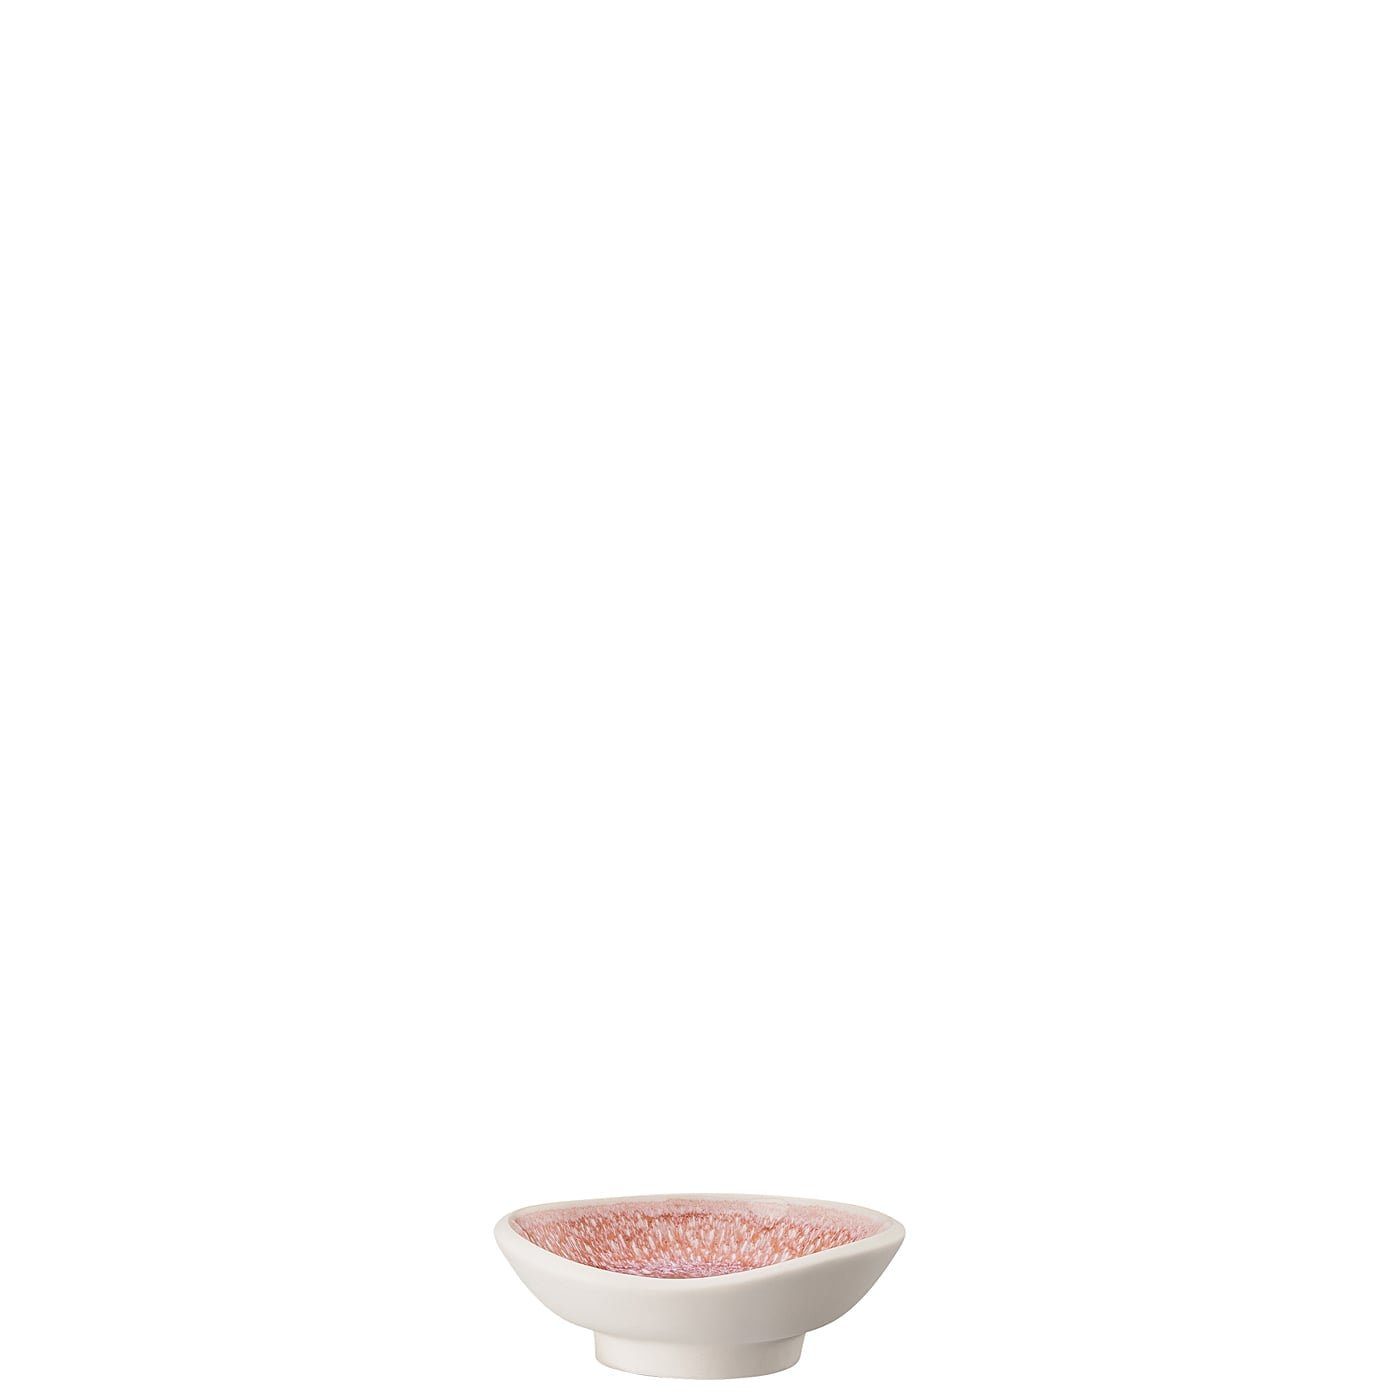 Rosenthal Schale Junto Rose Quartz Bowl 10 cm, Steinzeug, mikrowellengeeignet